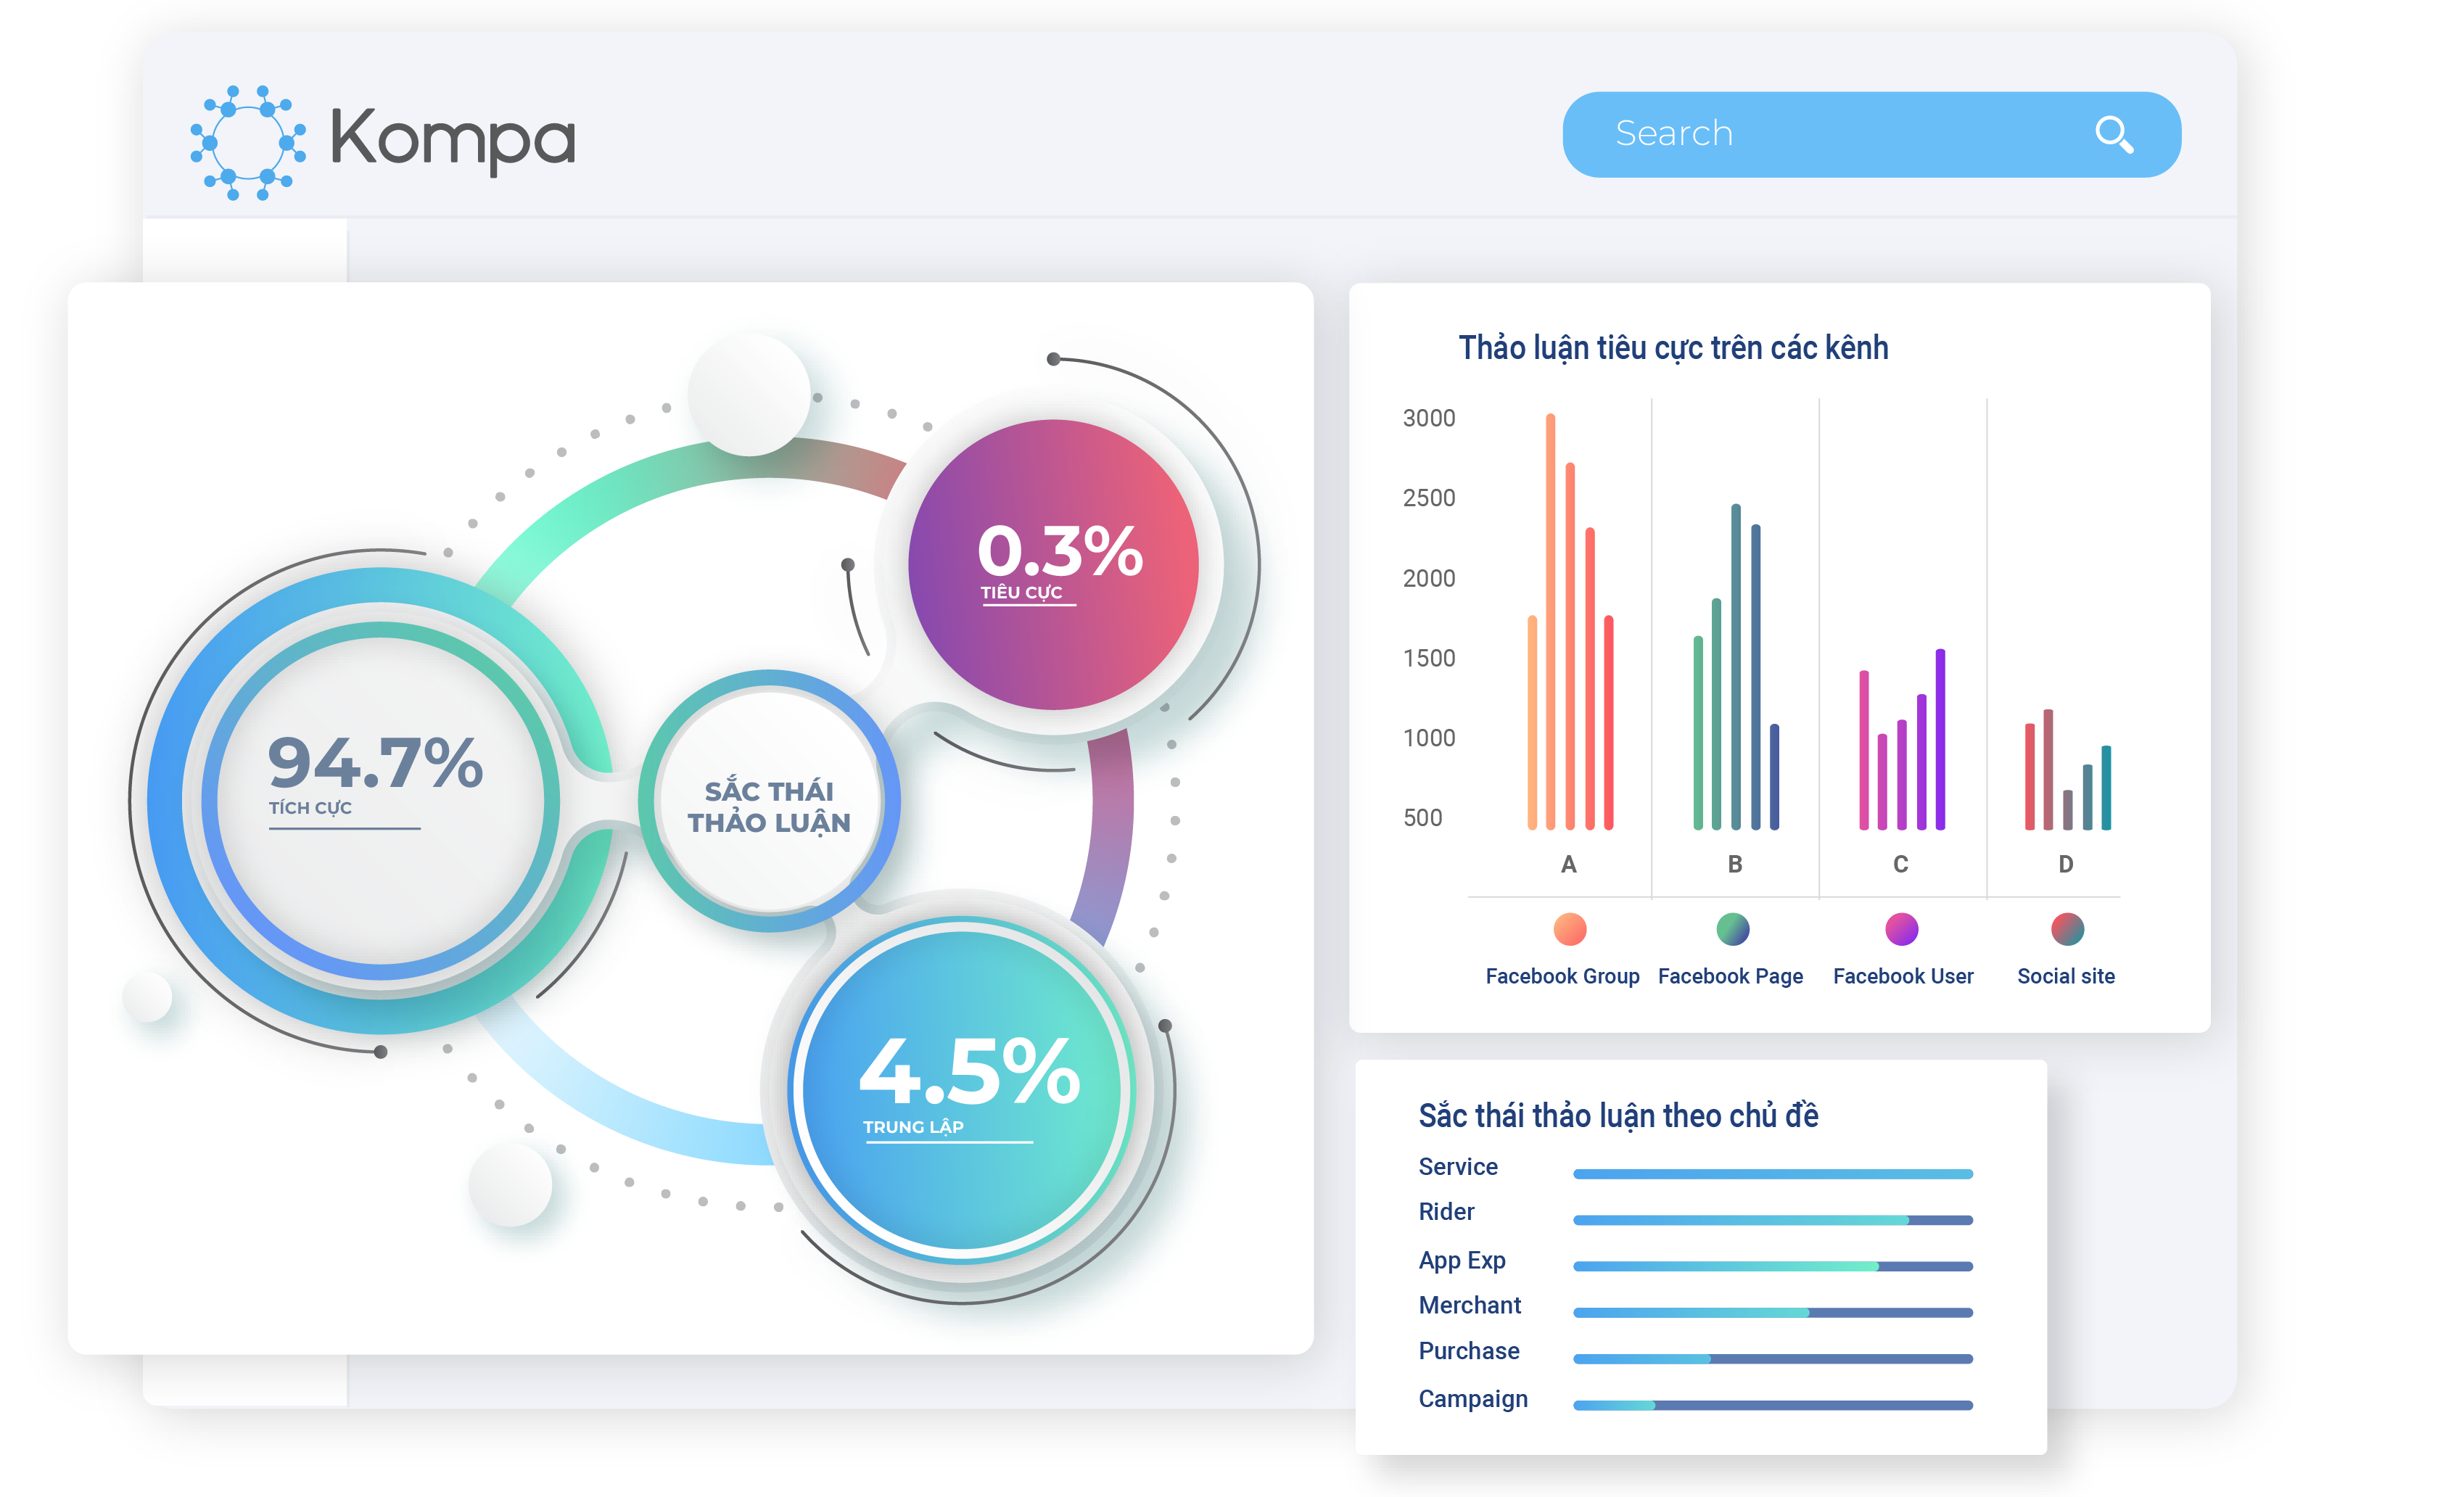 Kompa helps Businesses optimize market data